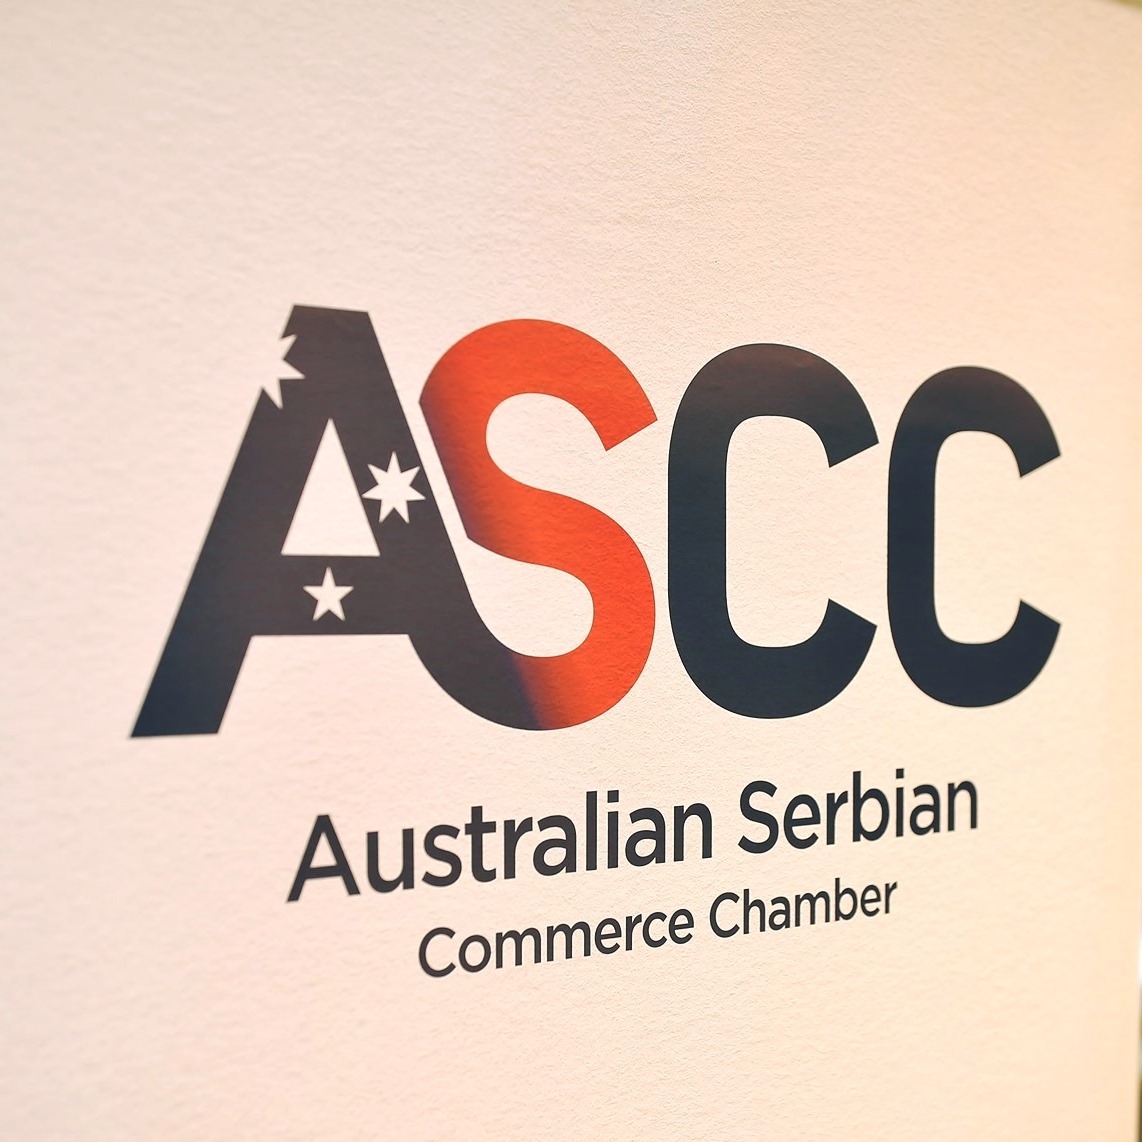 Australian Serbian Commerce Chamber